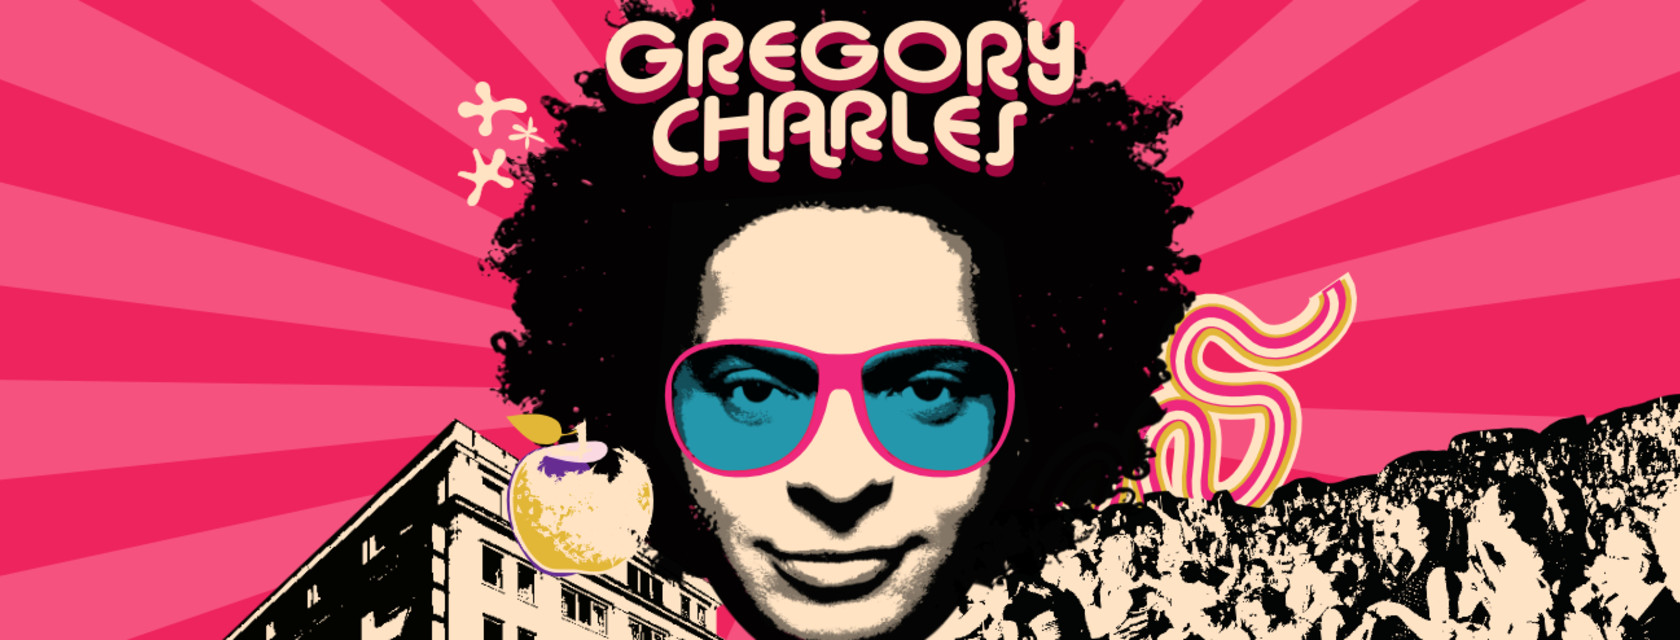 Gregory Charles presents "Vintage 69"